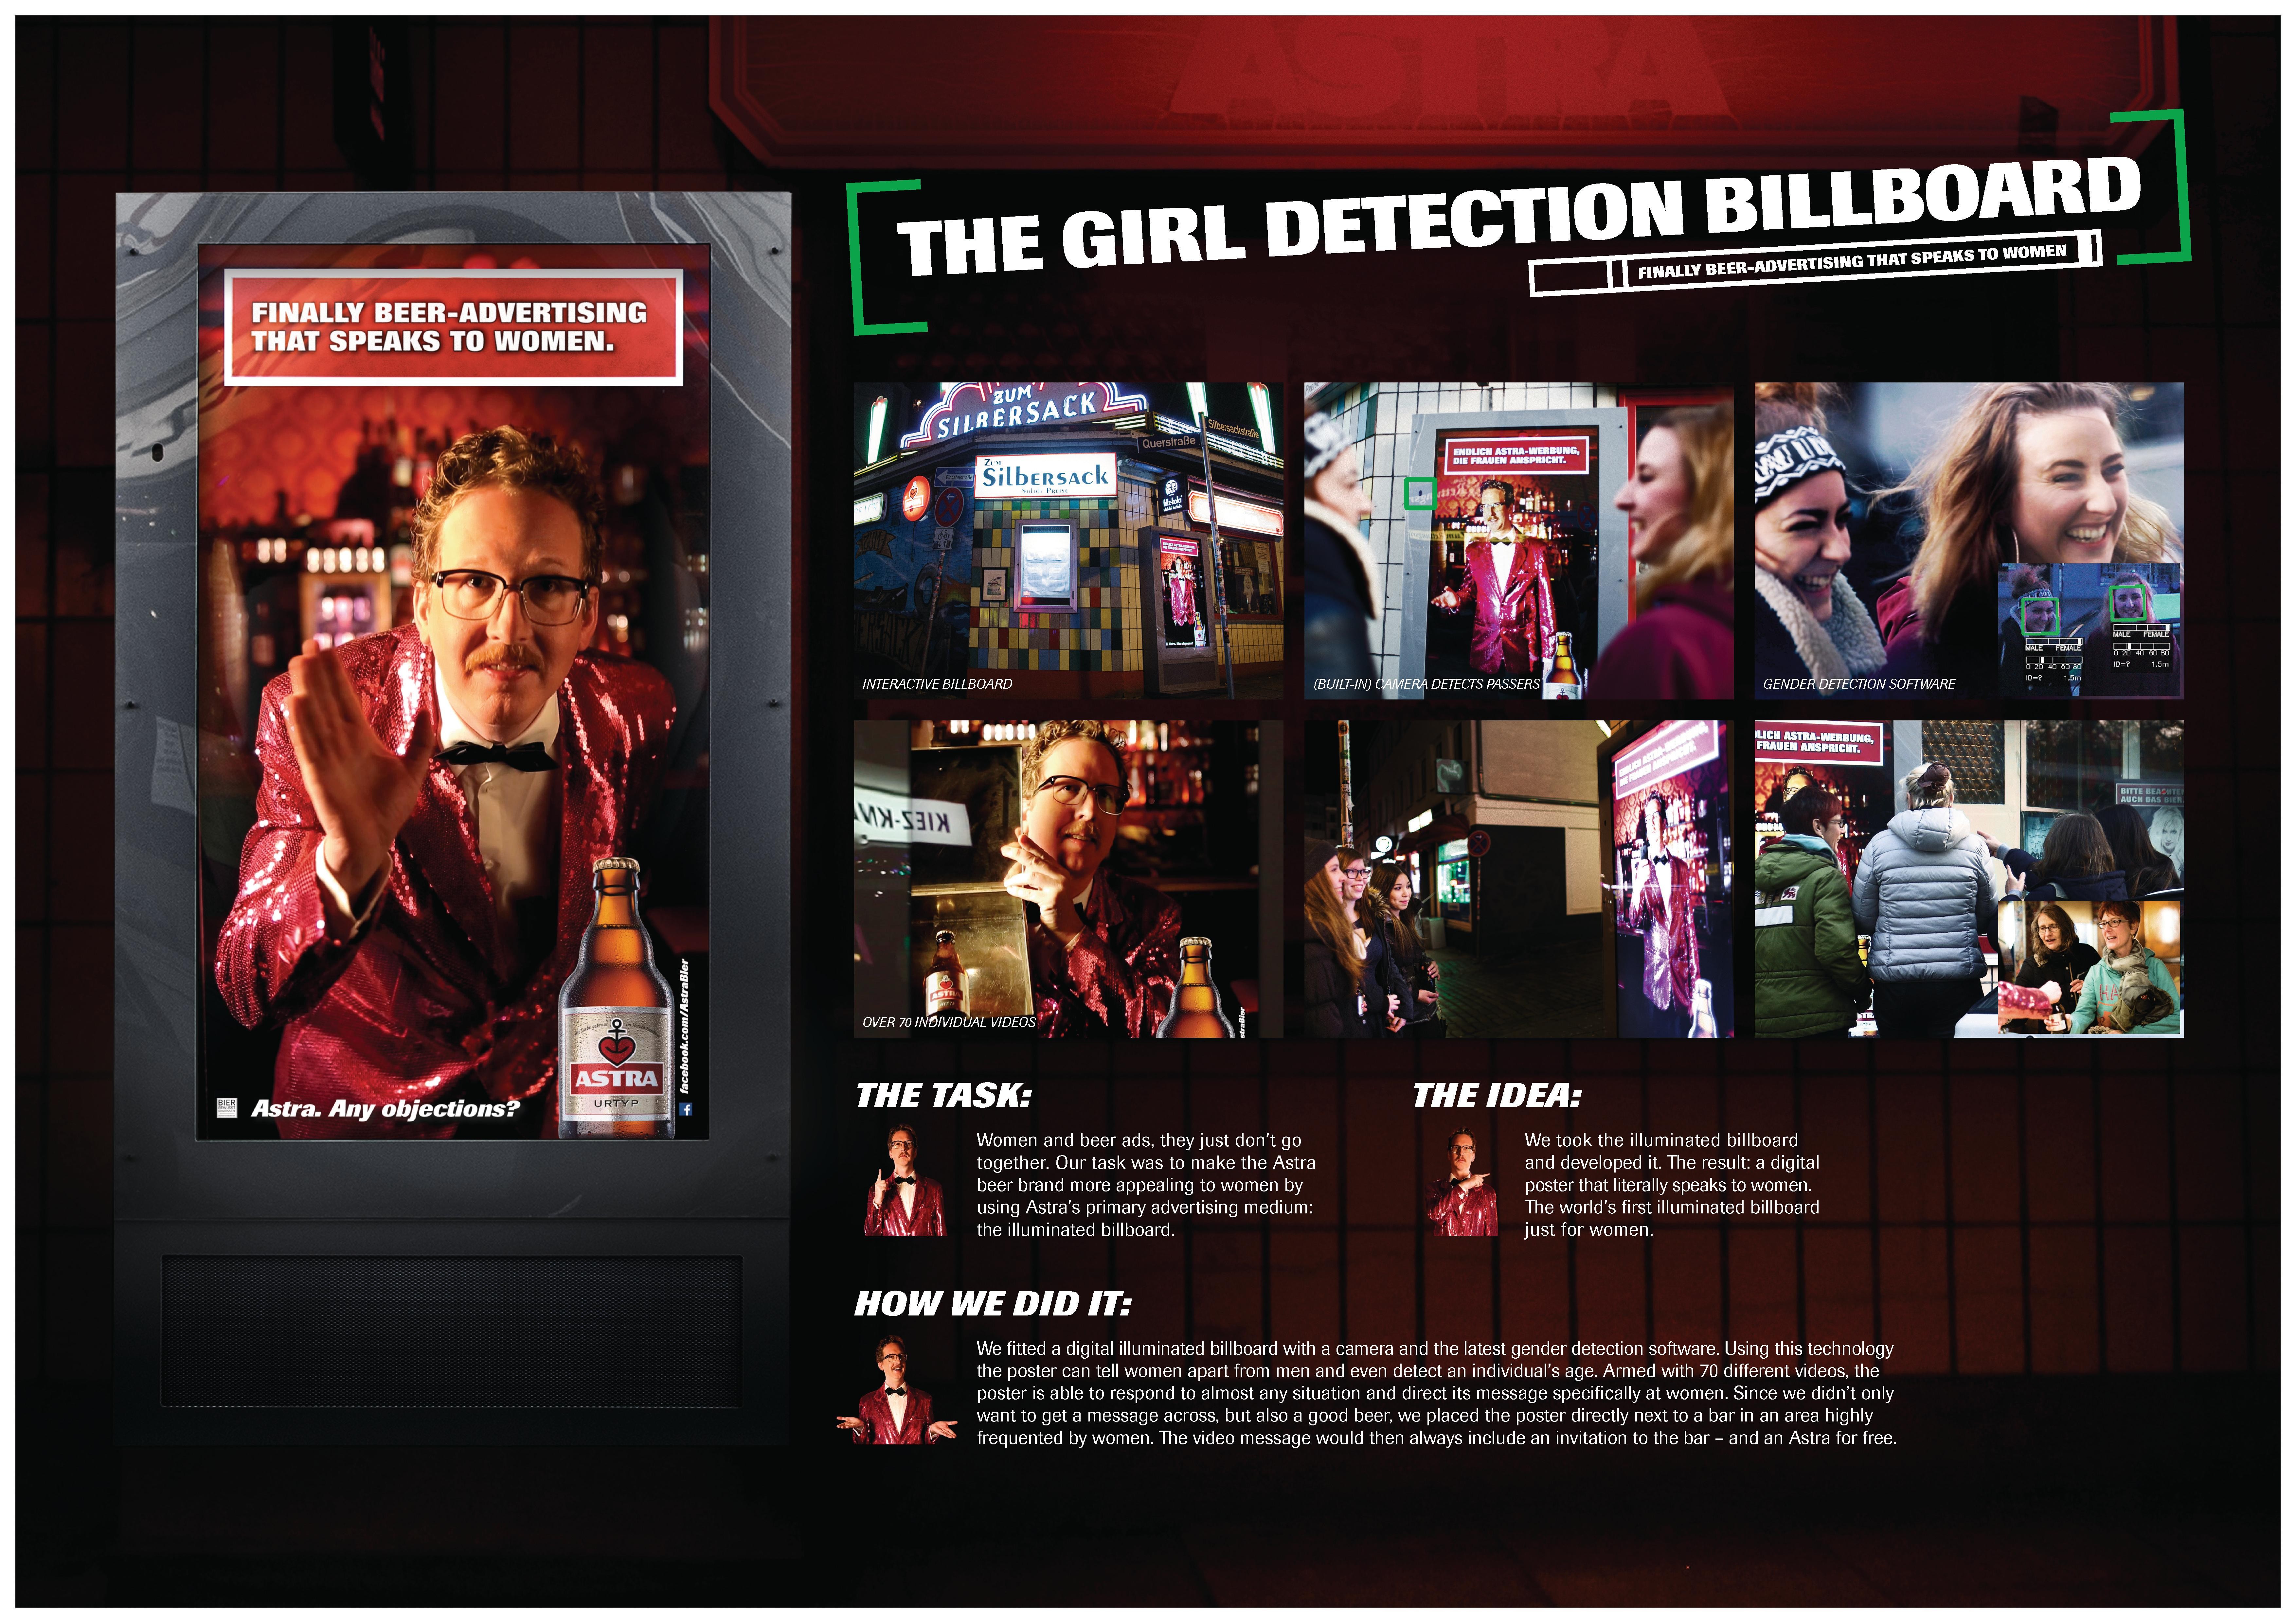 THE GIRL DETECTION BILLBOARD